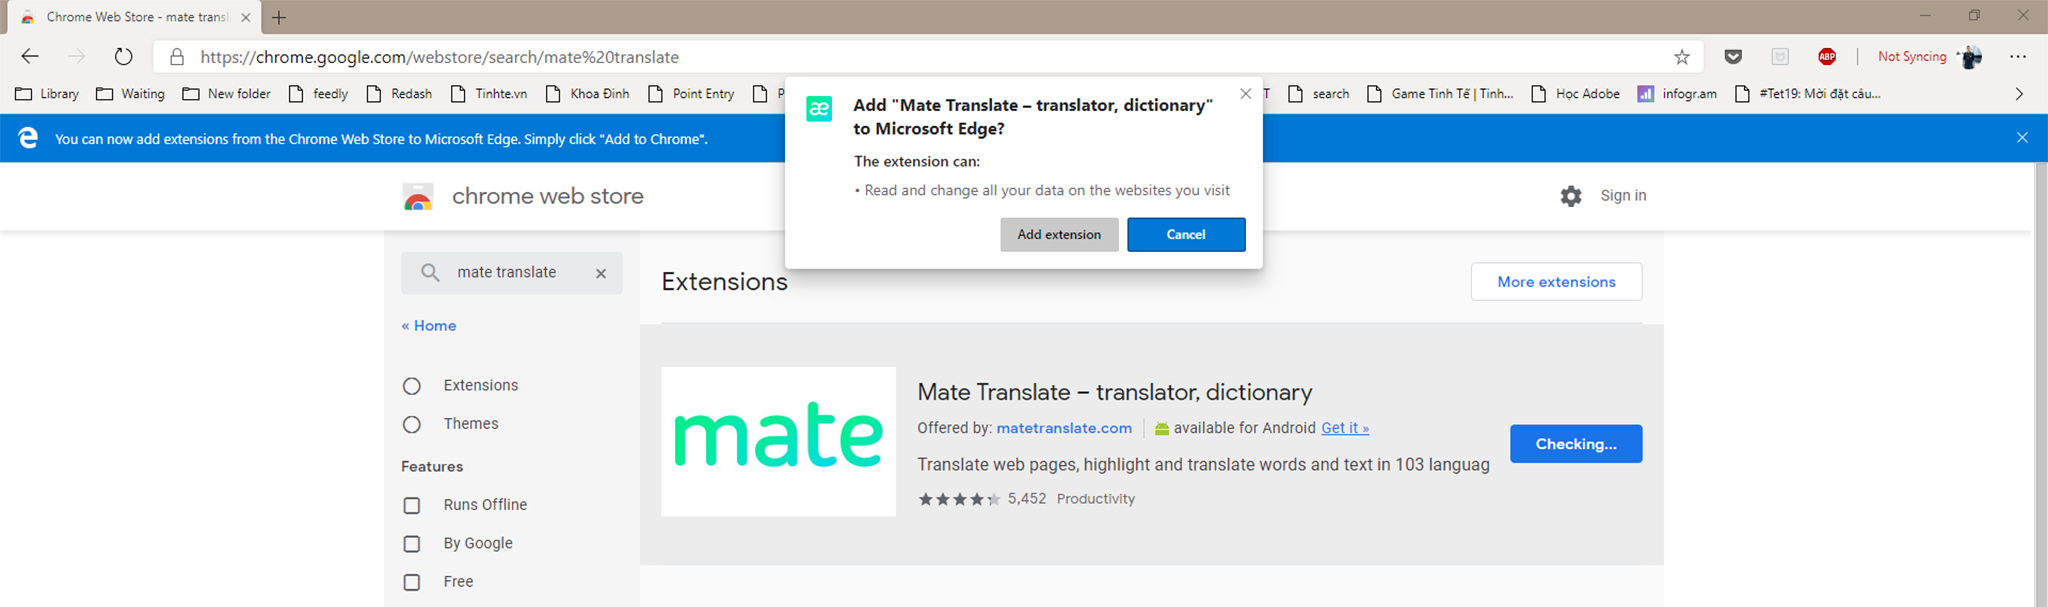 mate translate extension chrome